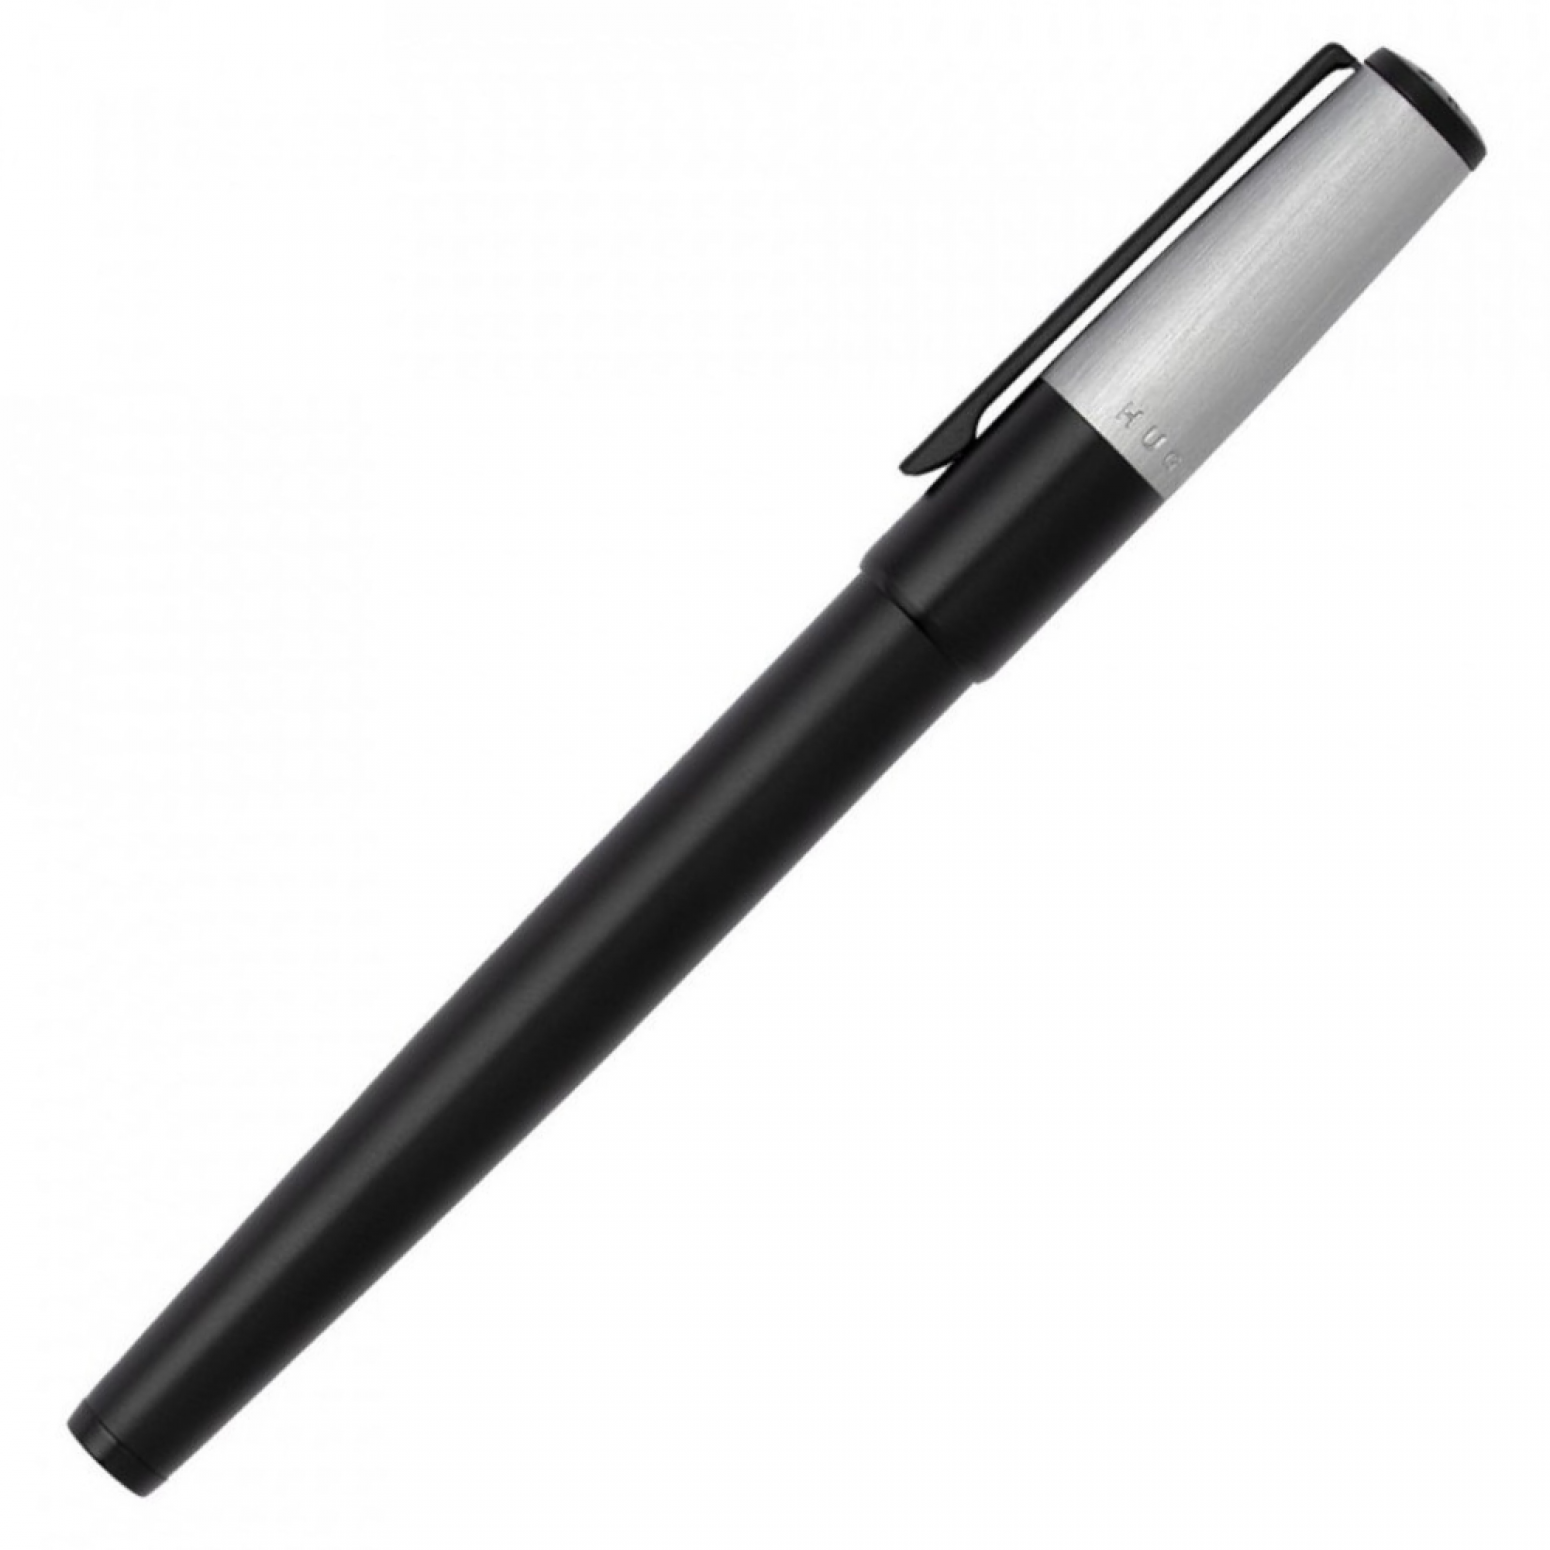 Hugo Boss rollerball pen, Gear Minimal Black & Chrome HSN1895B, ac1275 LUXURY GIFTS Κοσμηματα - chrilia.gr